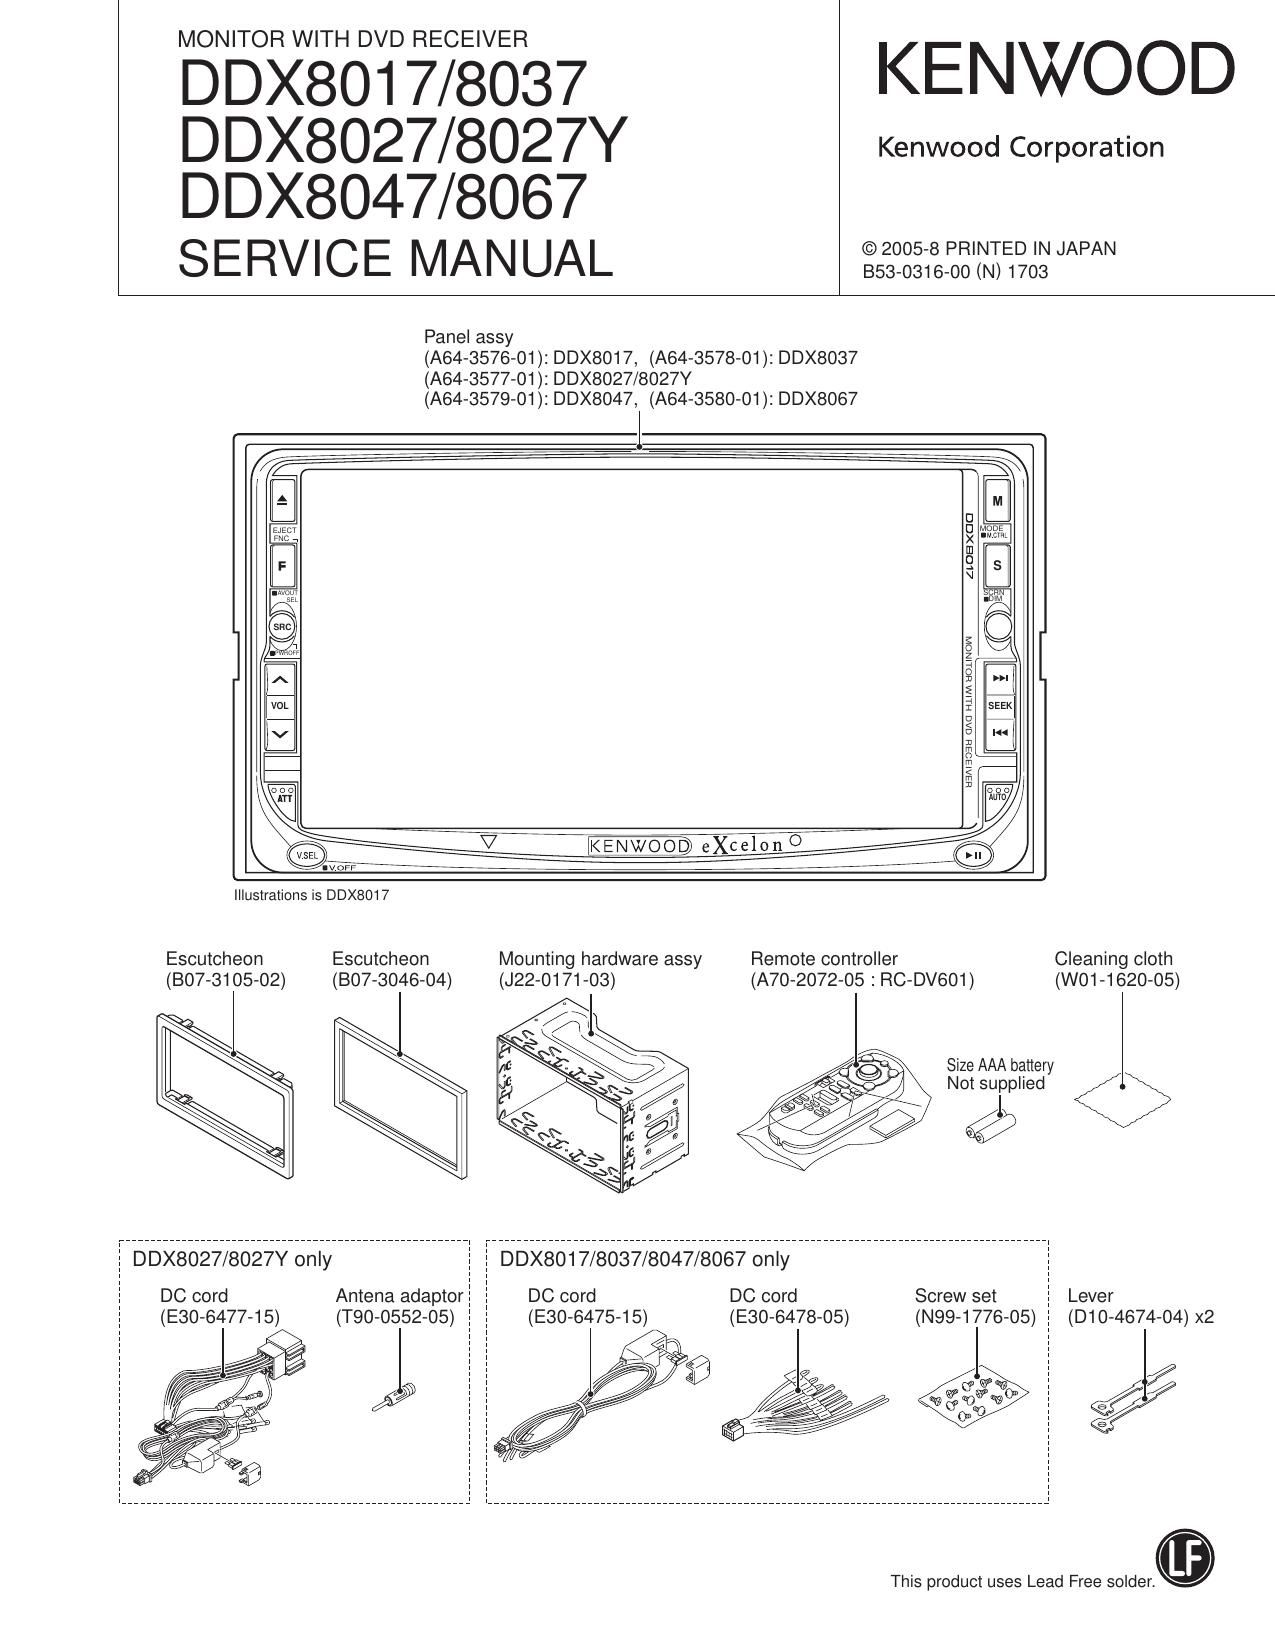 Kenwood DDX 8047 Service Manual